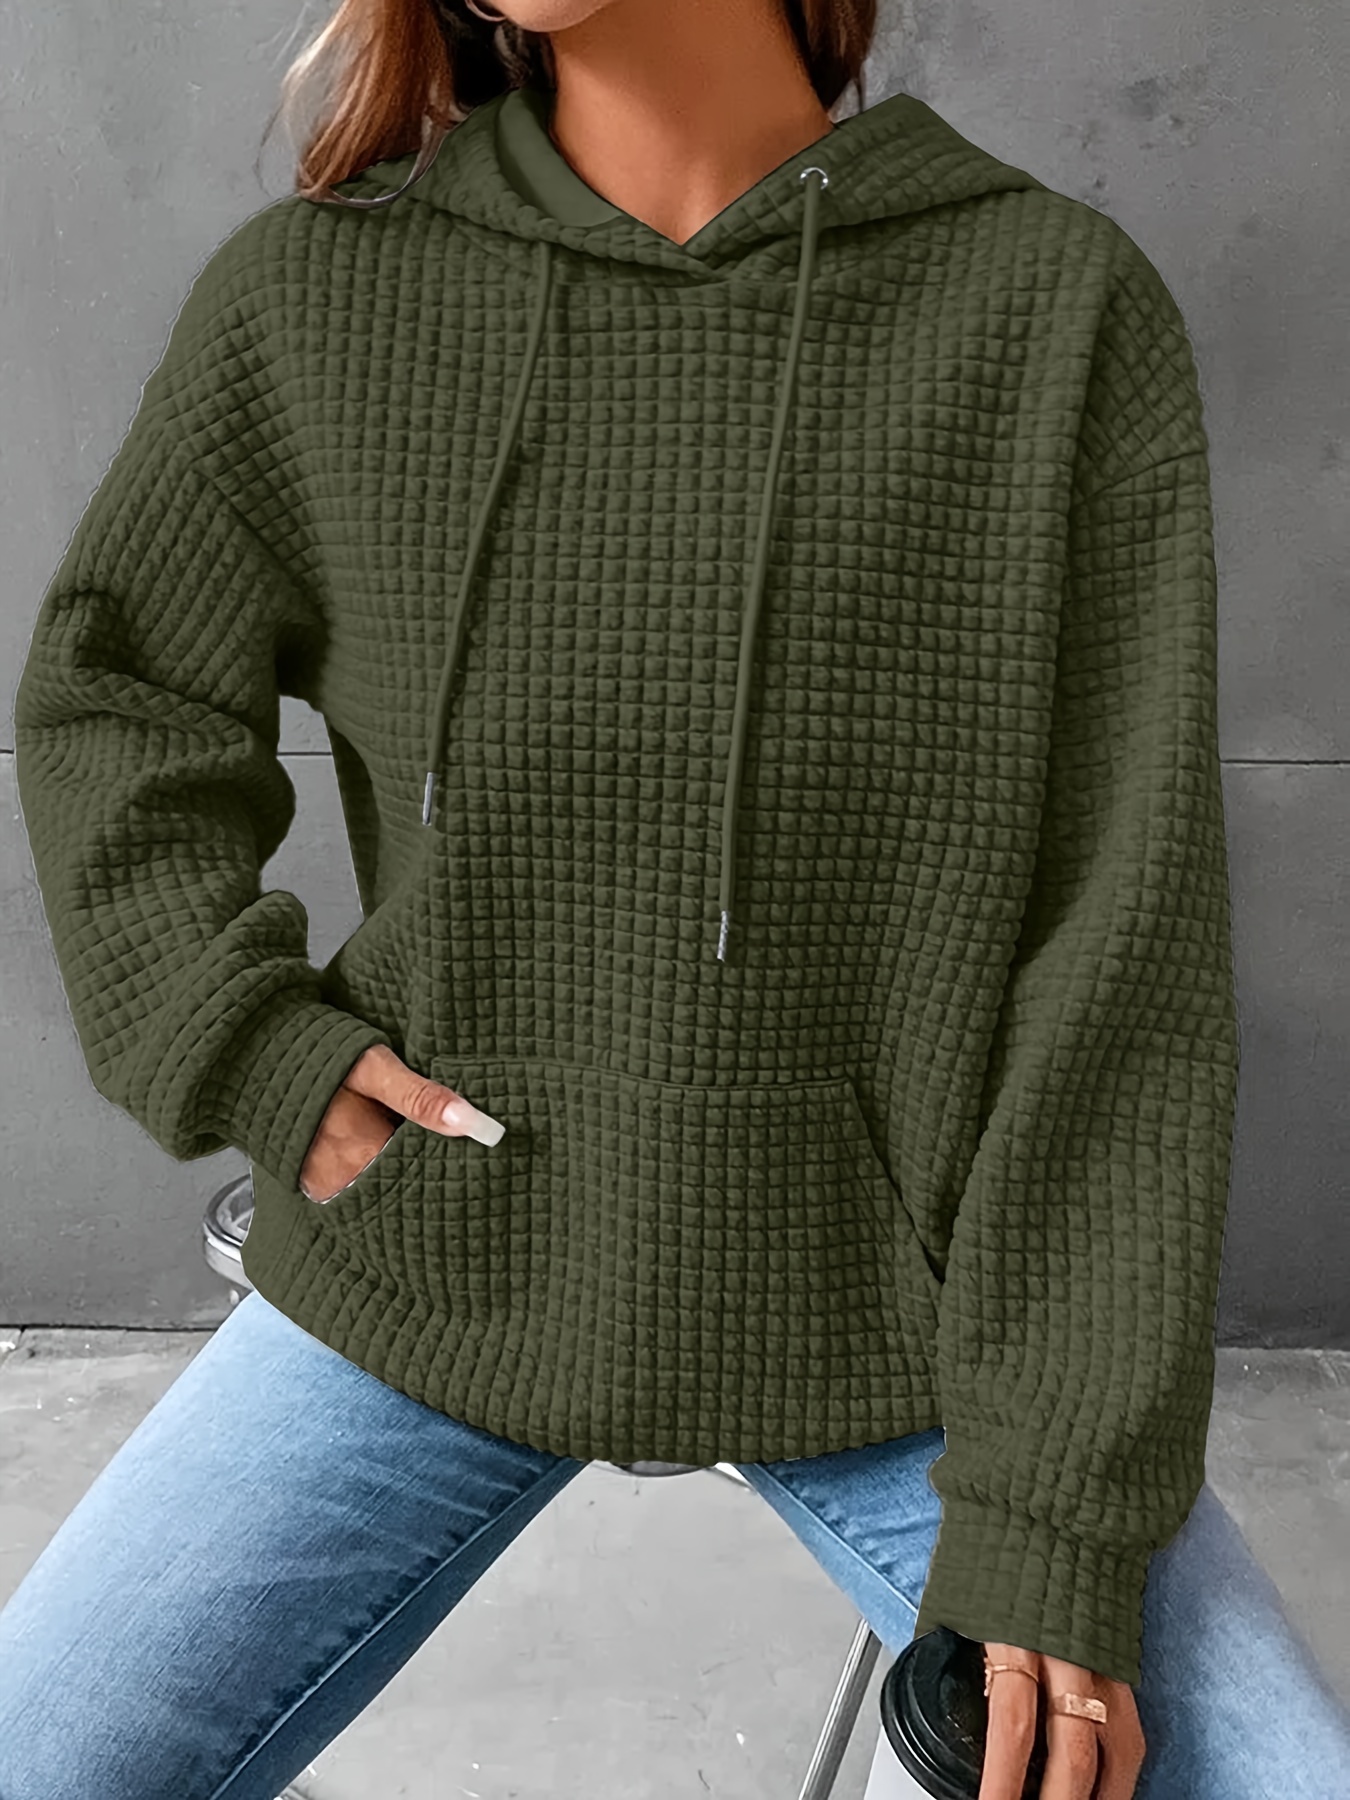 Wild Fable Women's Cropped Hoodie Sweatshirt Olive size Medium